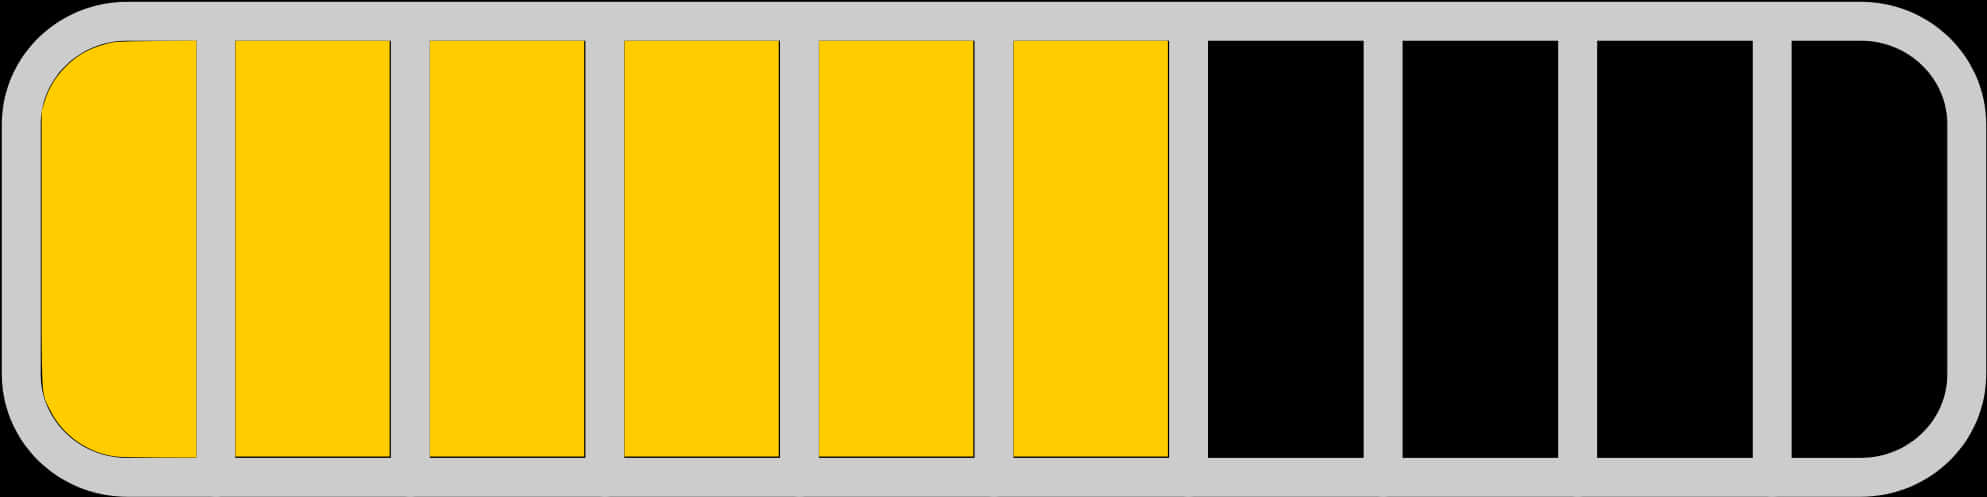 Yellow Black Loading Progress Bar PNG image